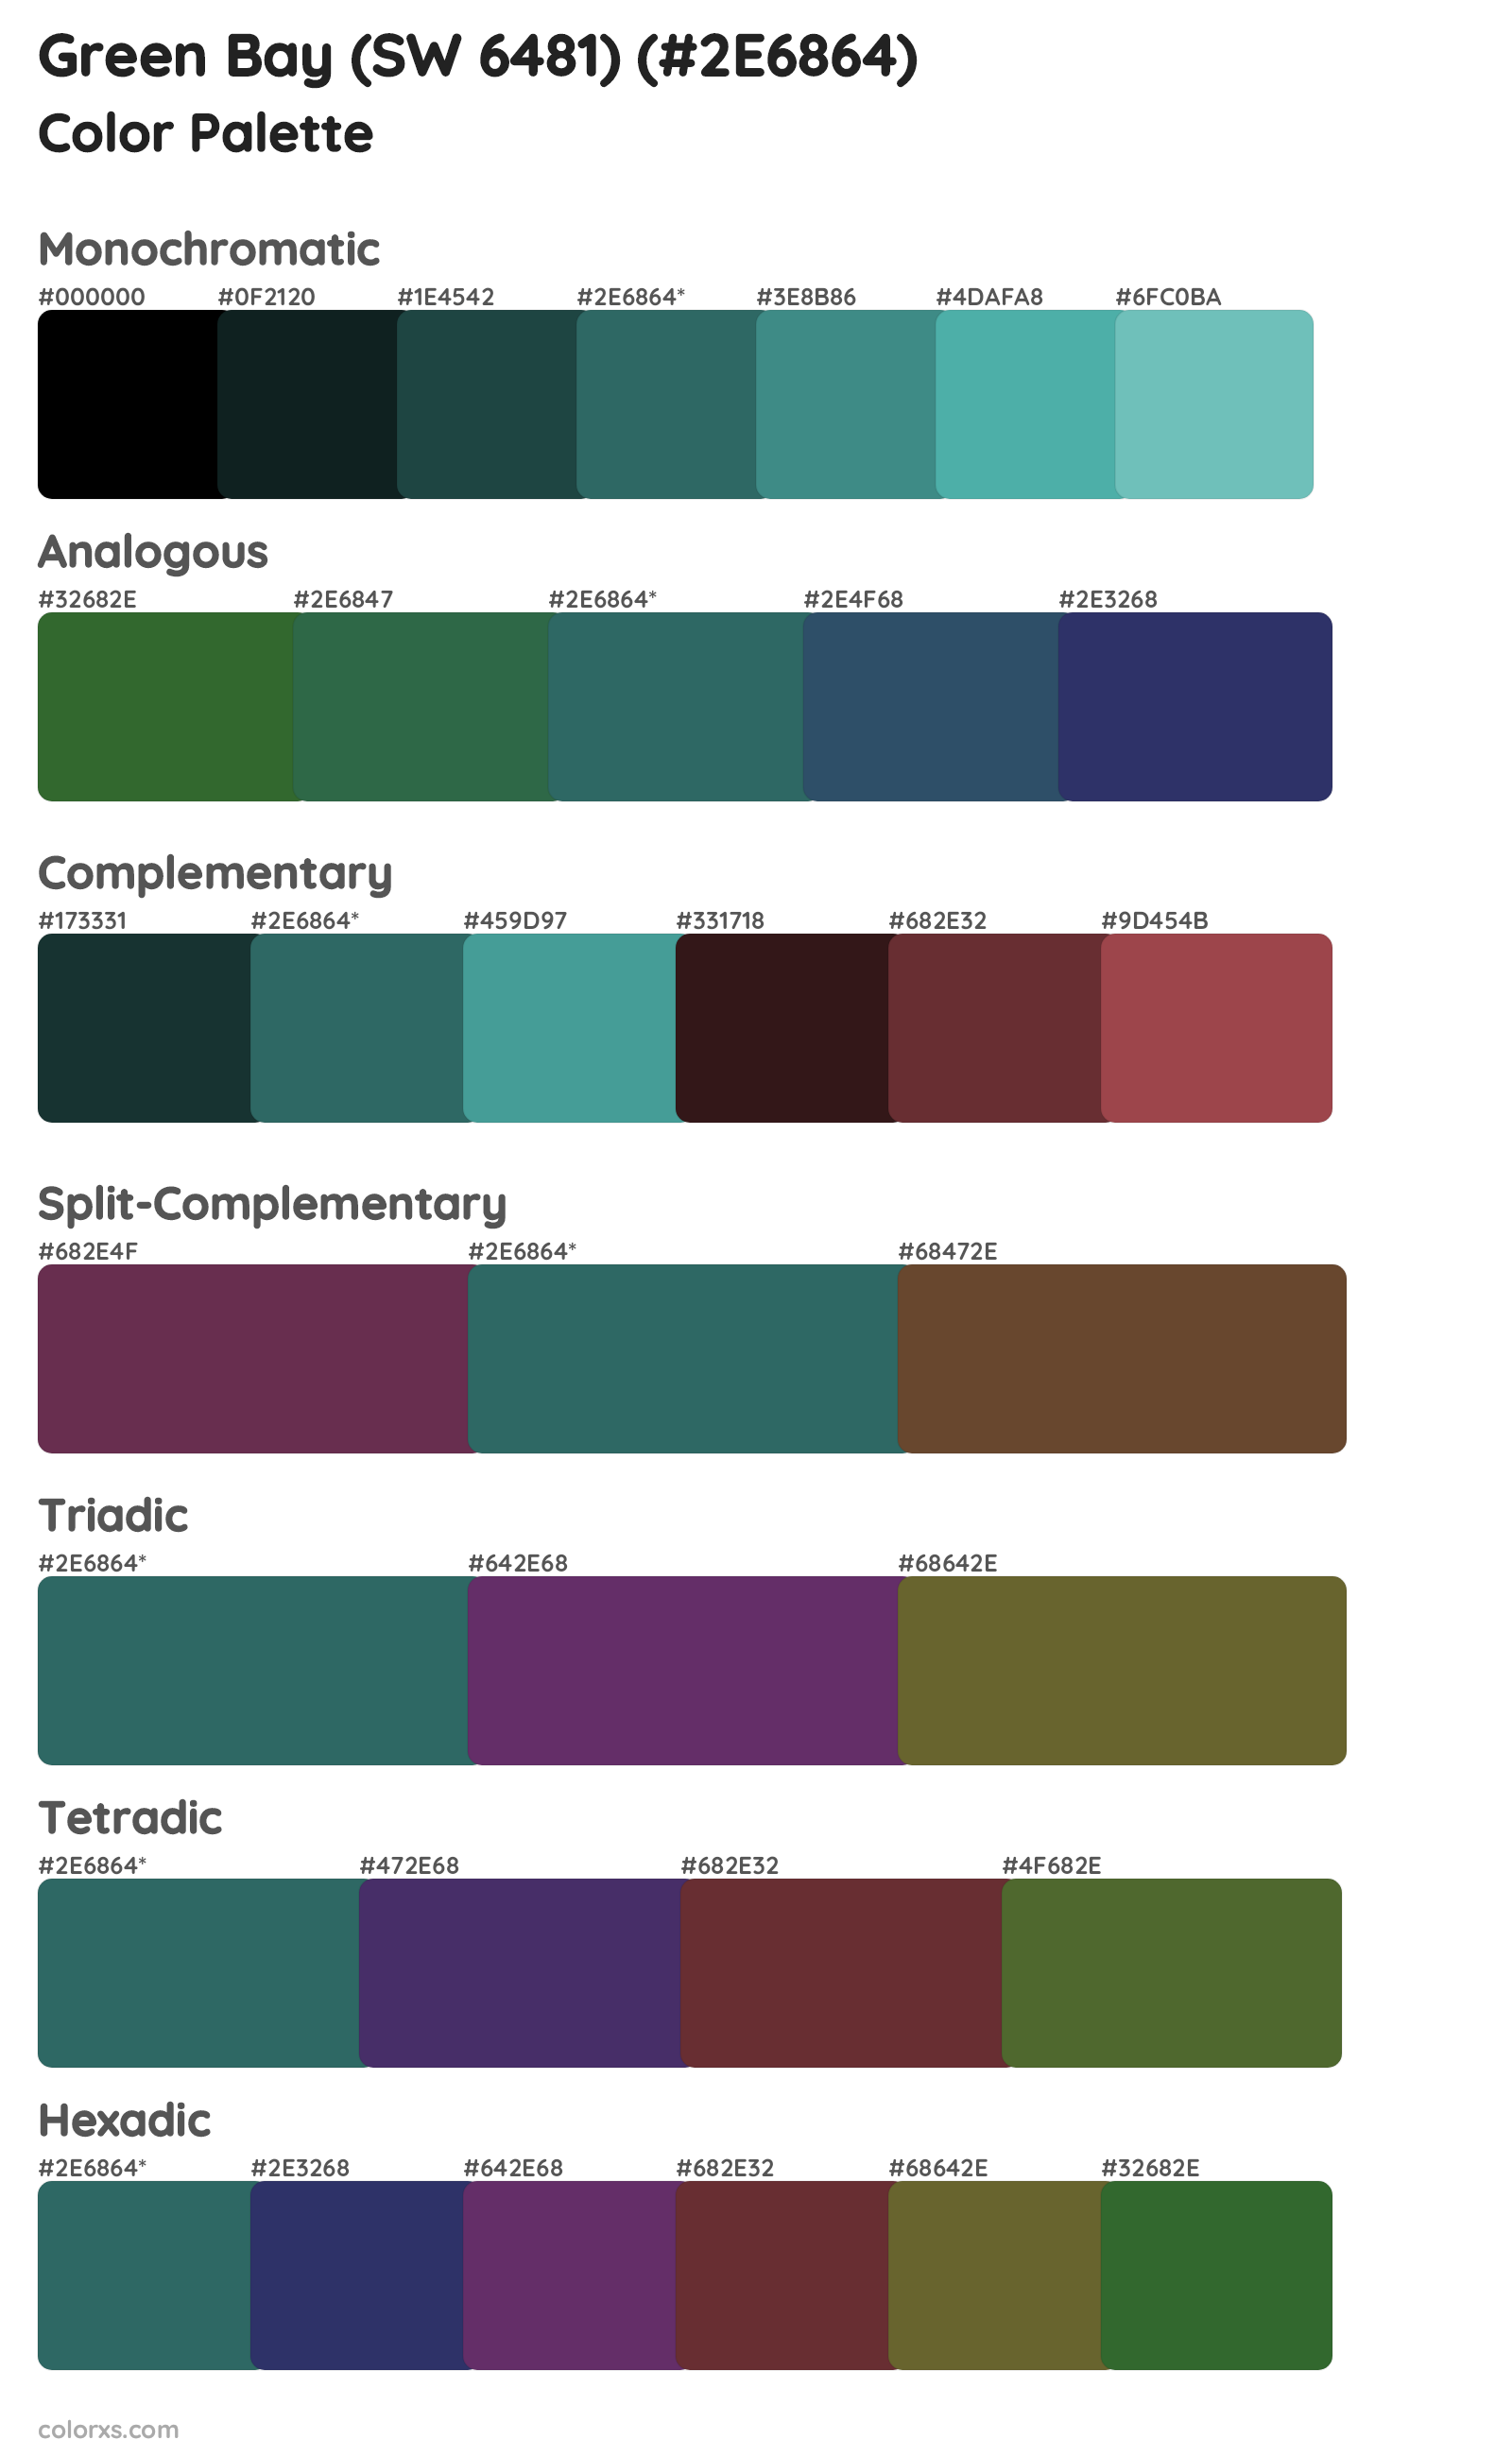 Green Bay (SW 6481) Color Scheme Palettes